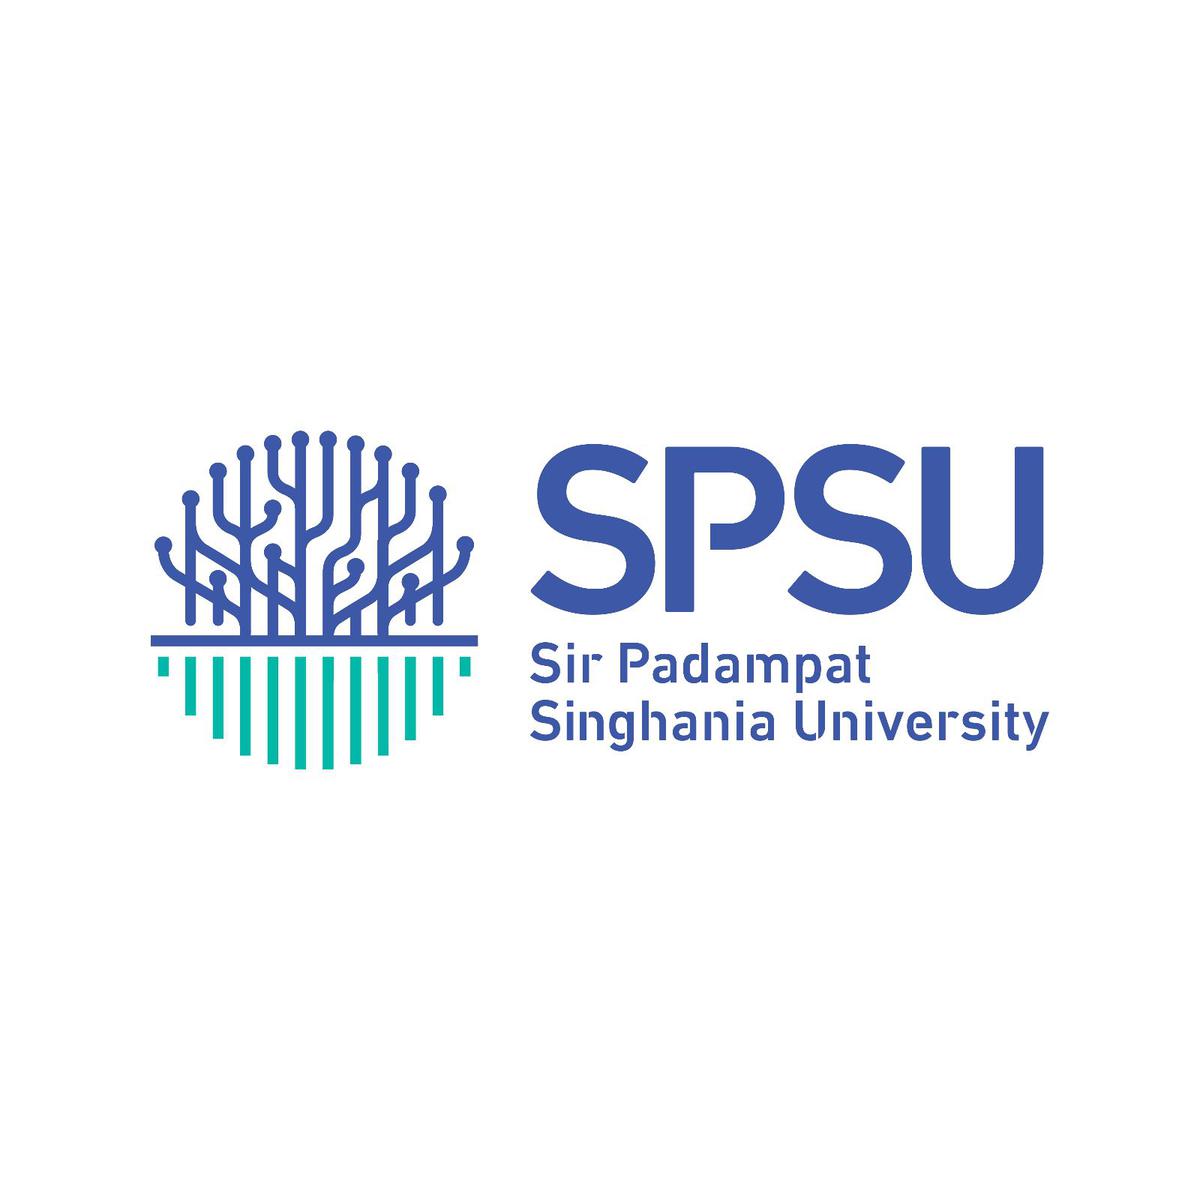 JK Cement’s Sir Padampat Singhania University reveals new brand logo